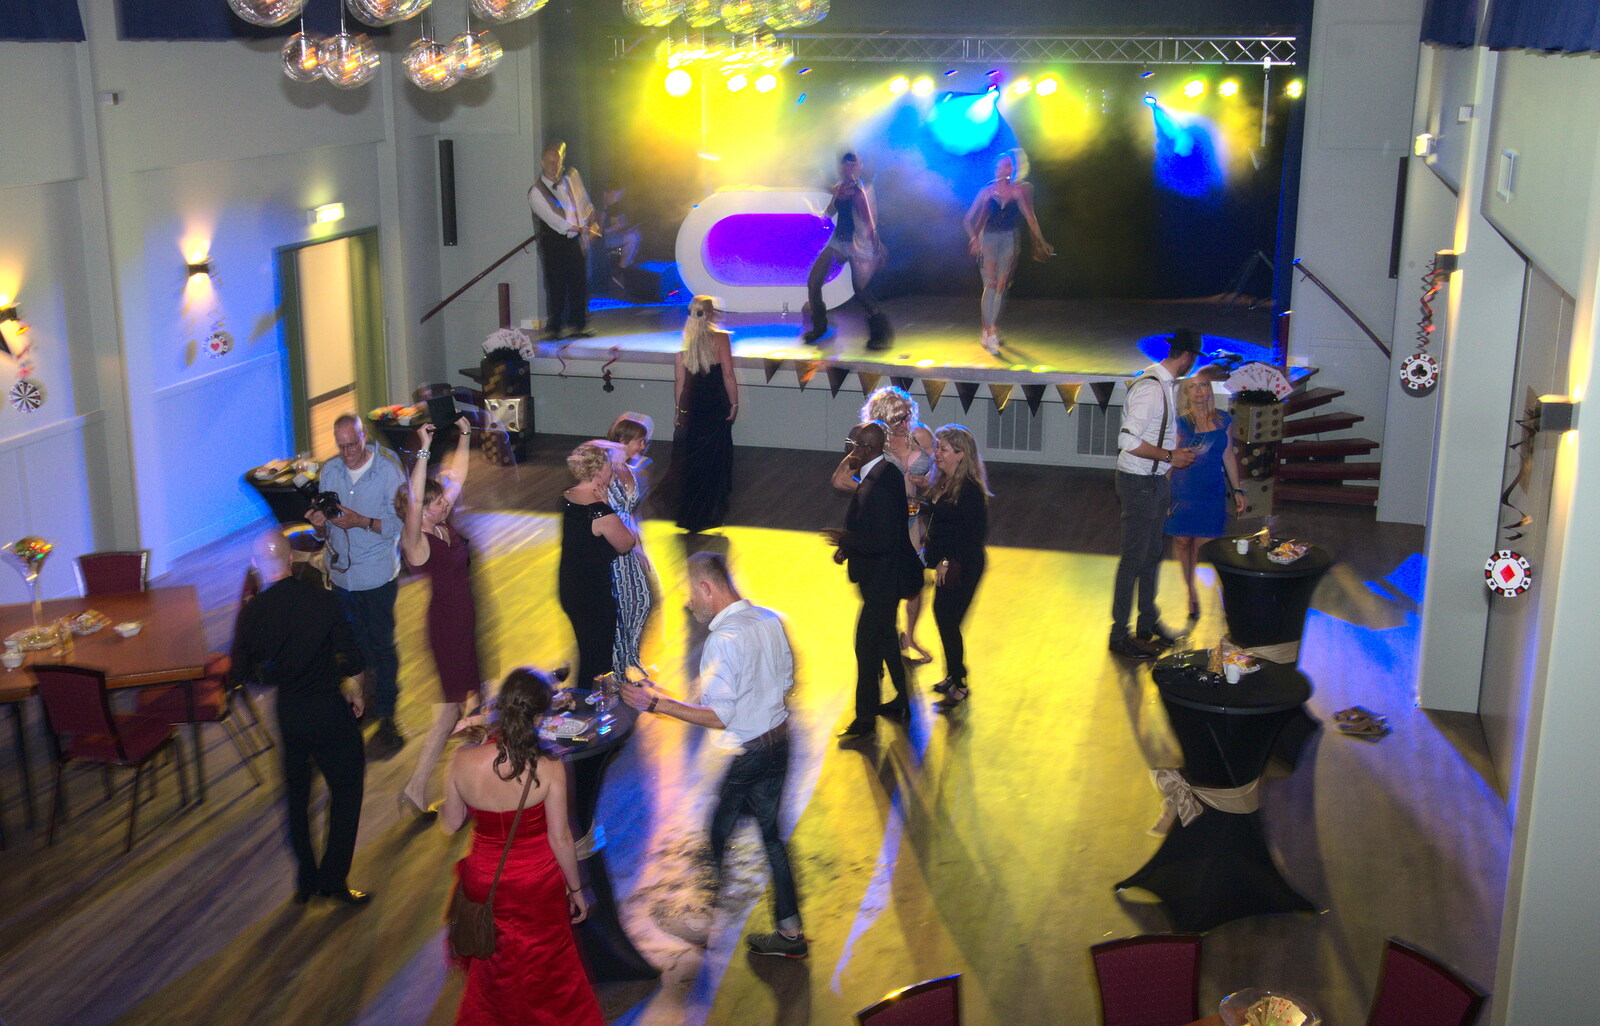 The dancefloor from Martin's James Bond 50th Birthday, Asperen, Gelderland, Netherlands - 9th June 2018